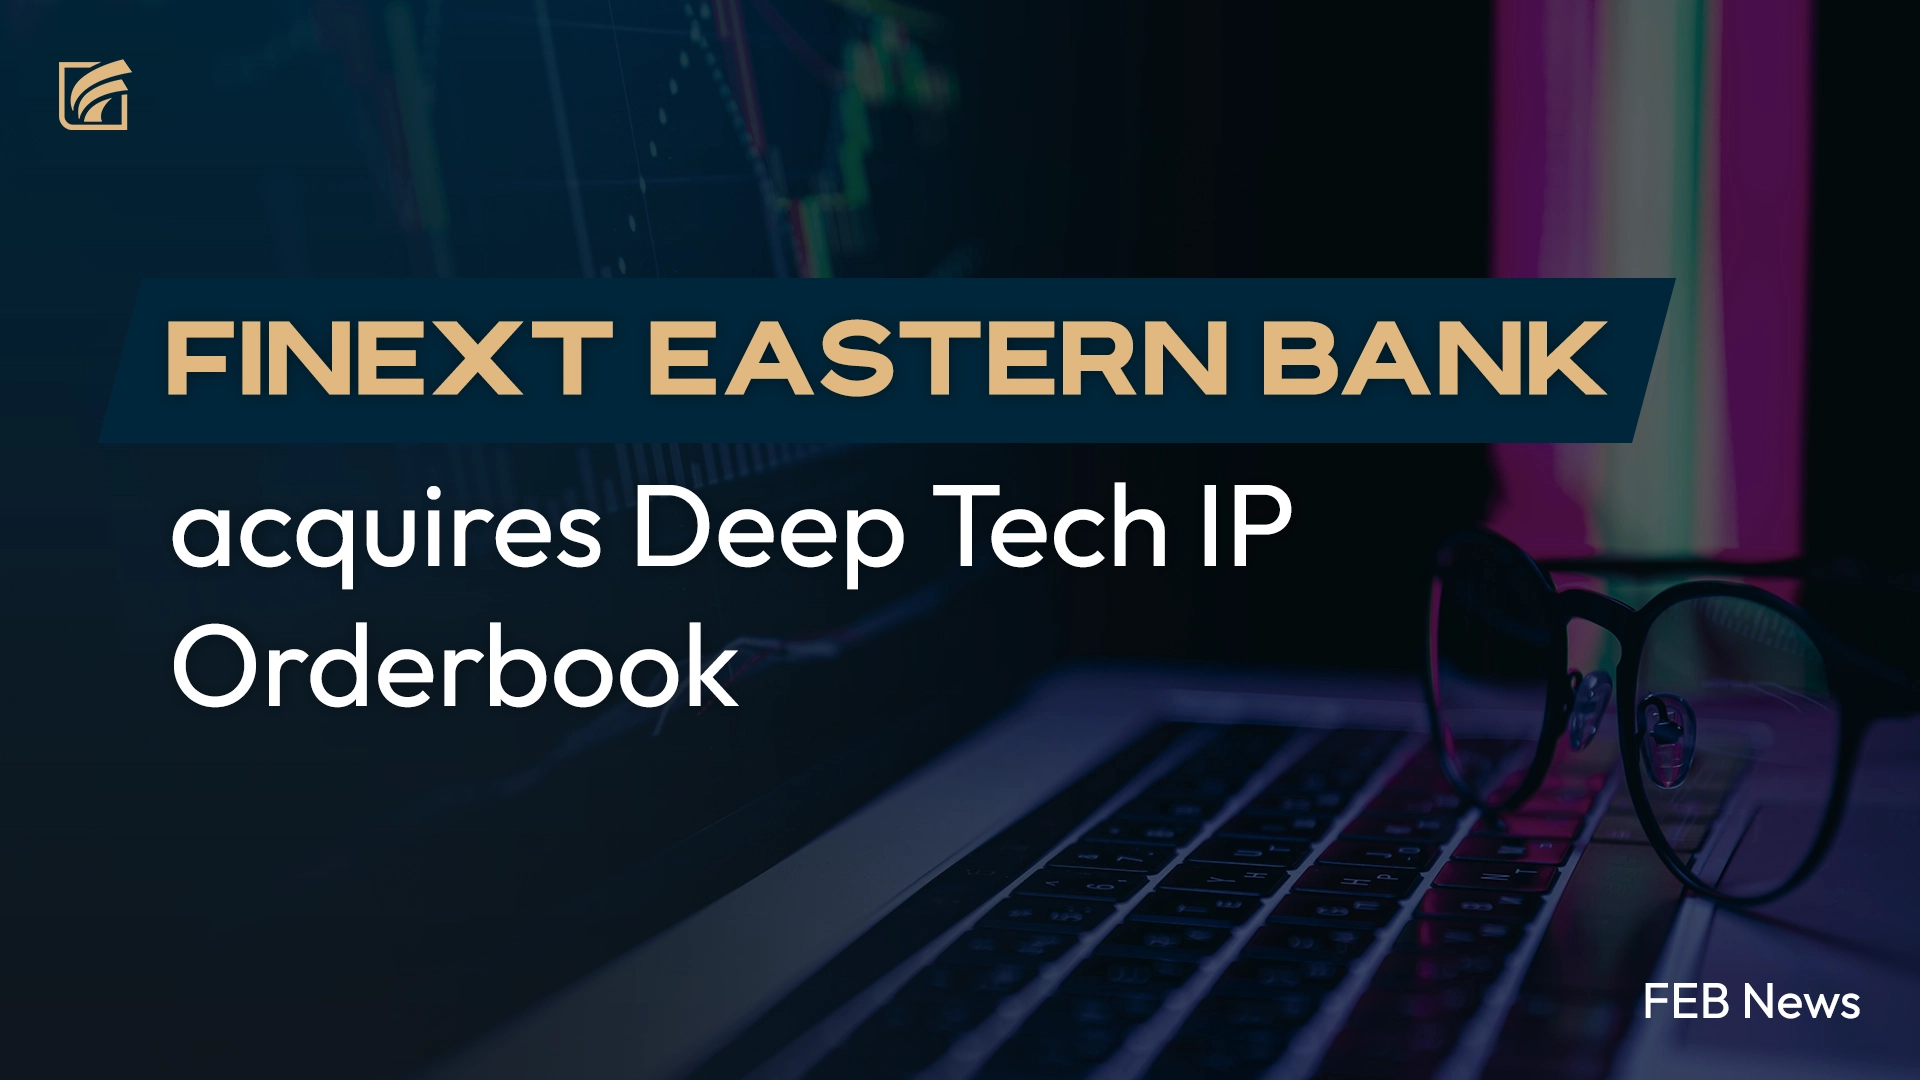 Finext Eastern Bank acquires Deep Tech IP Orderbook